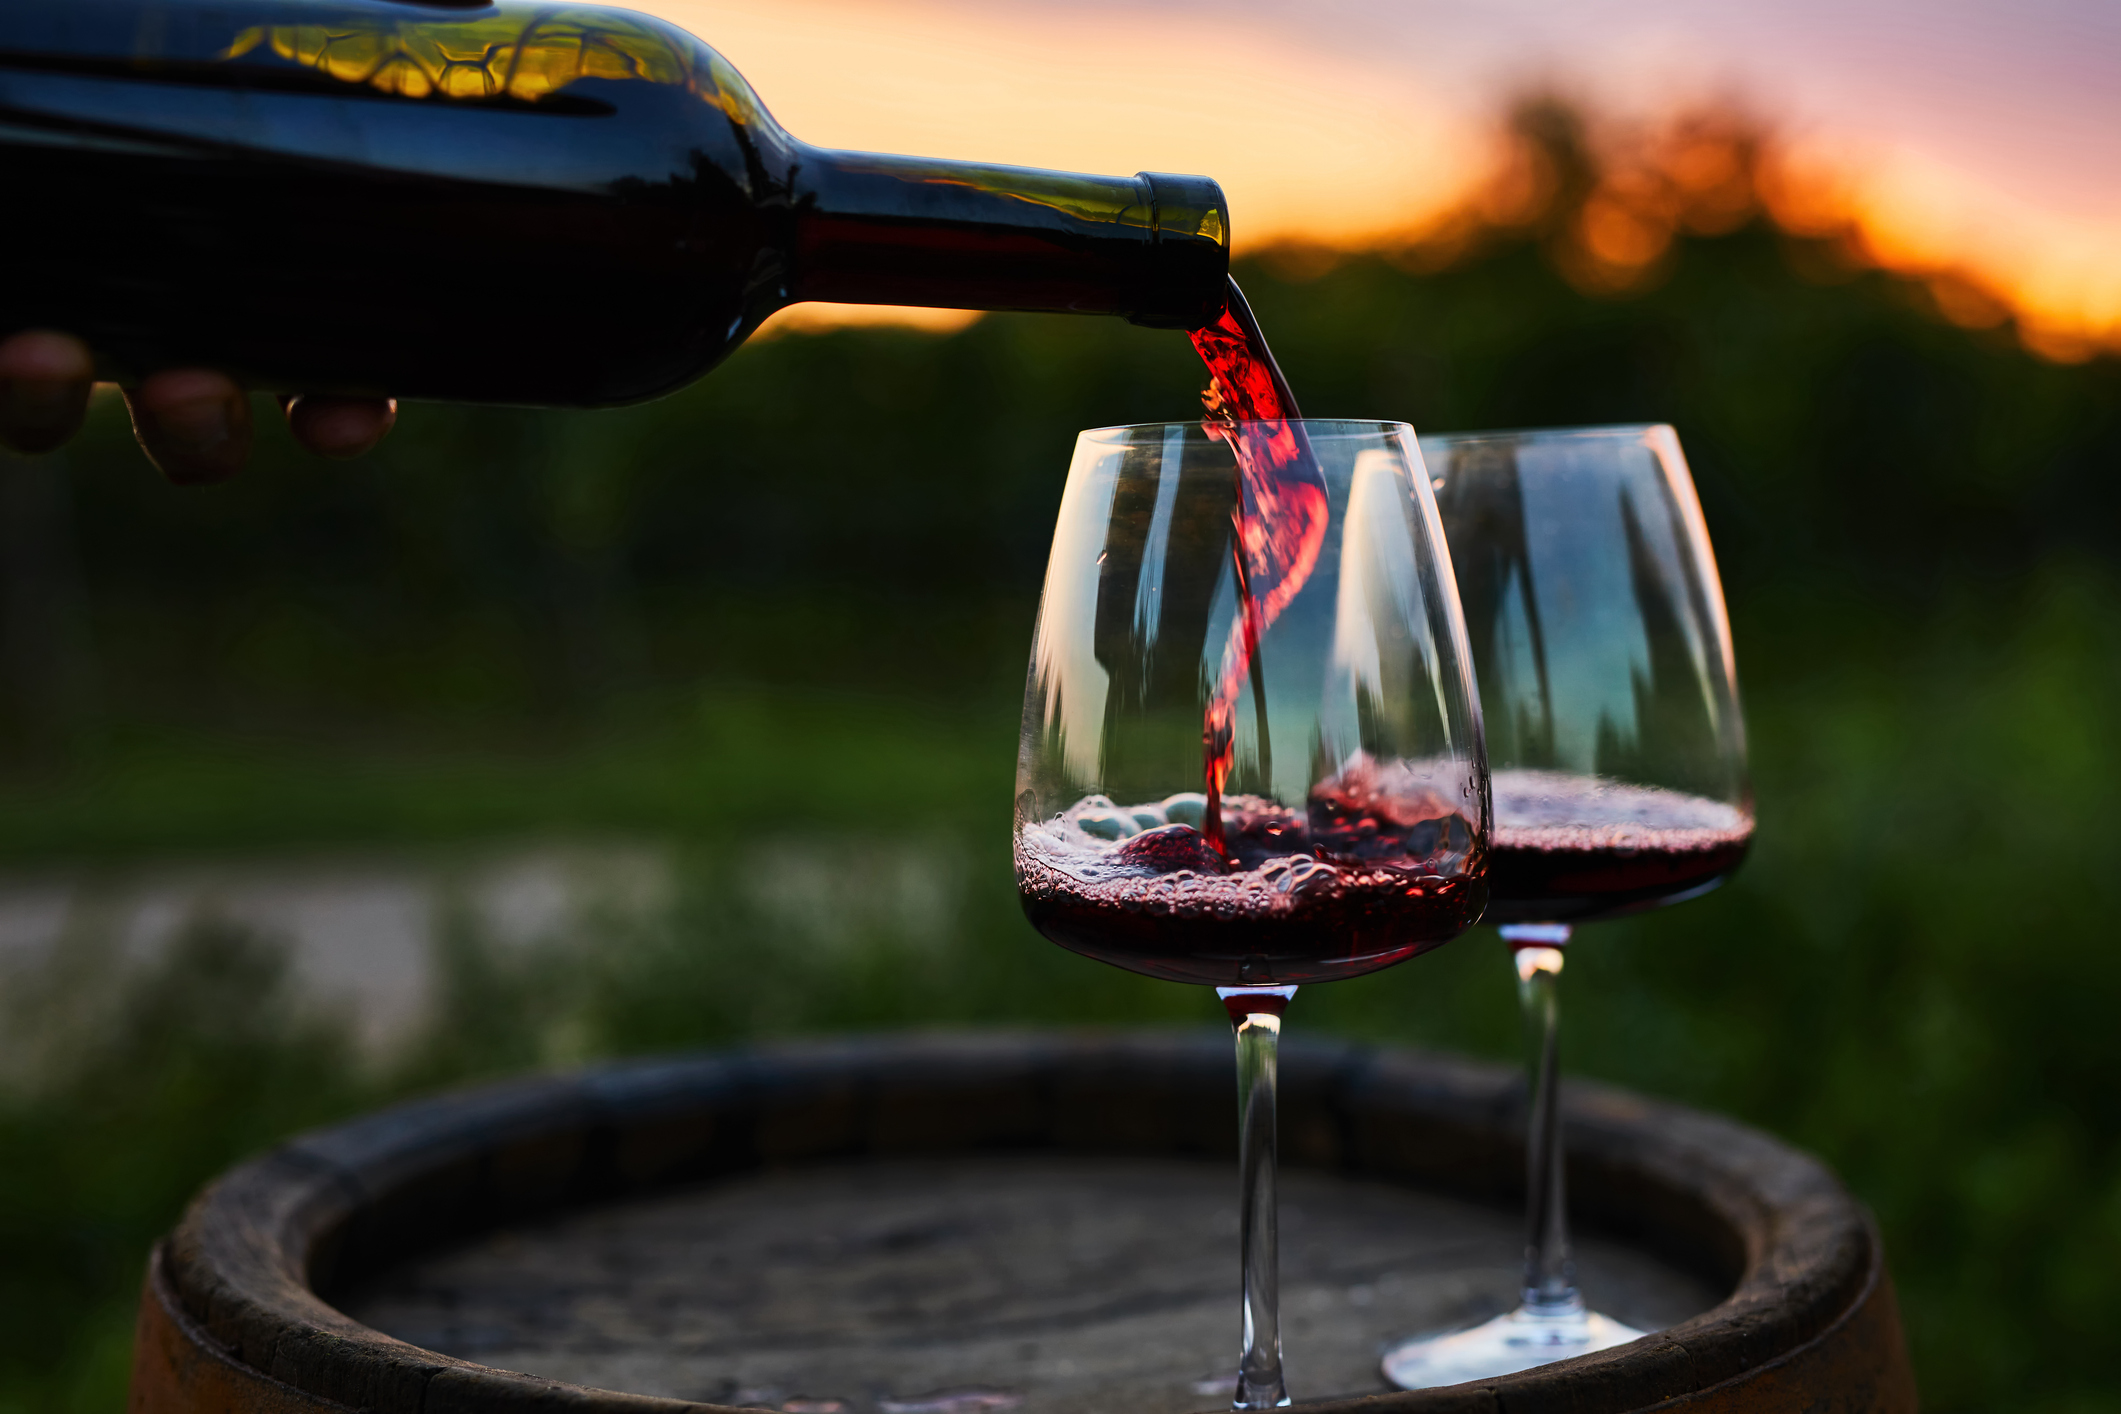 Pouring red wine into glasses on the barrel at dusk (Photo: iStock - Rostislav_Sedlacek)